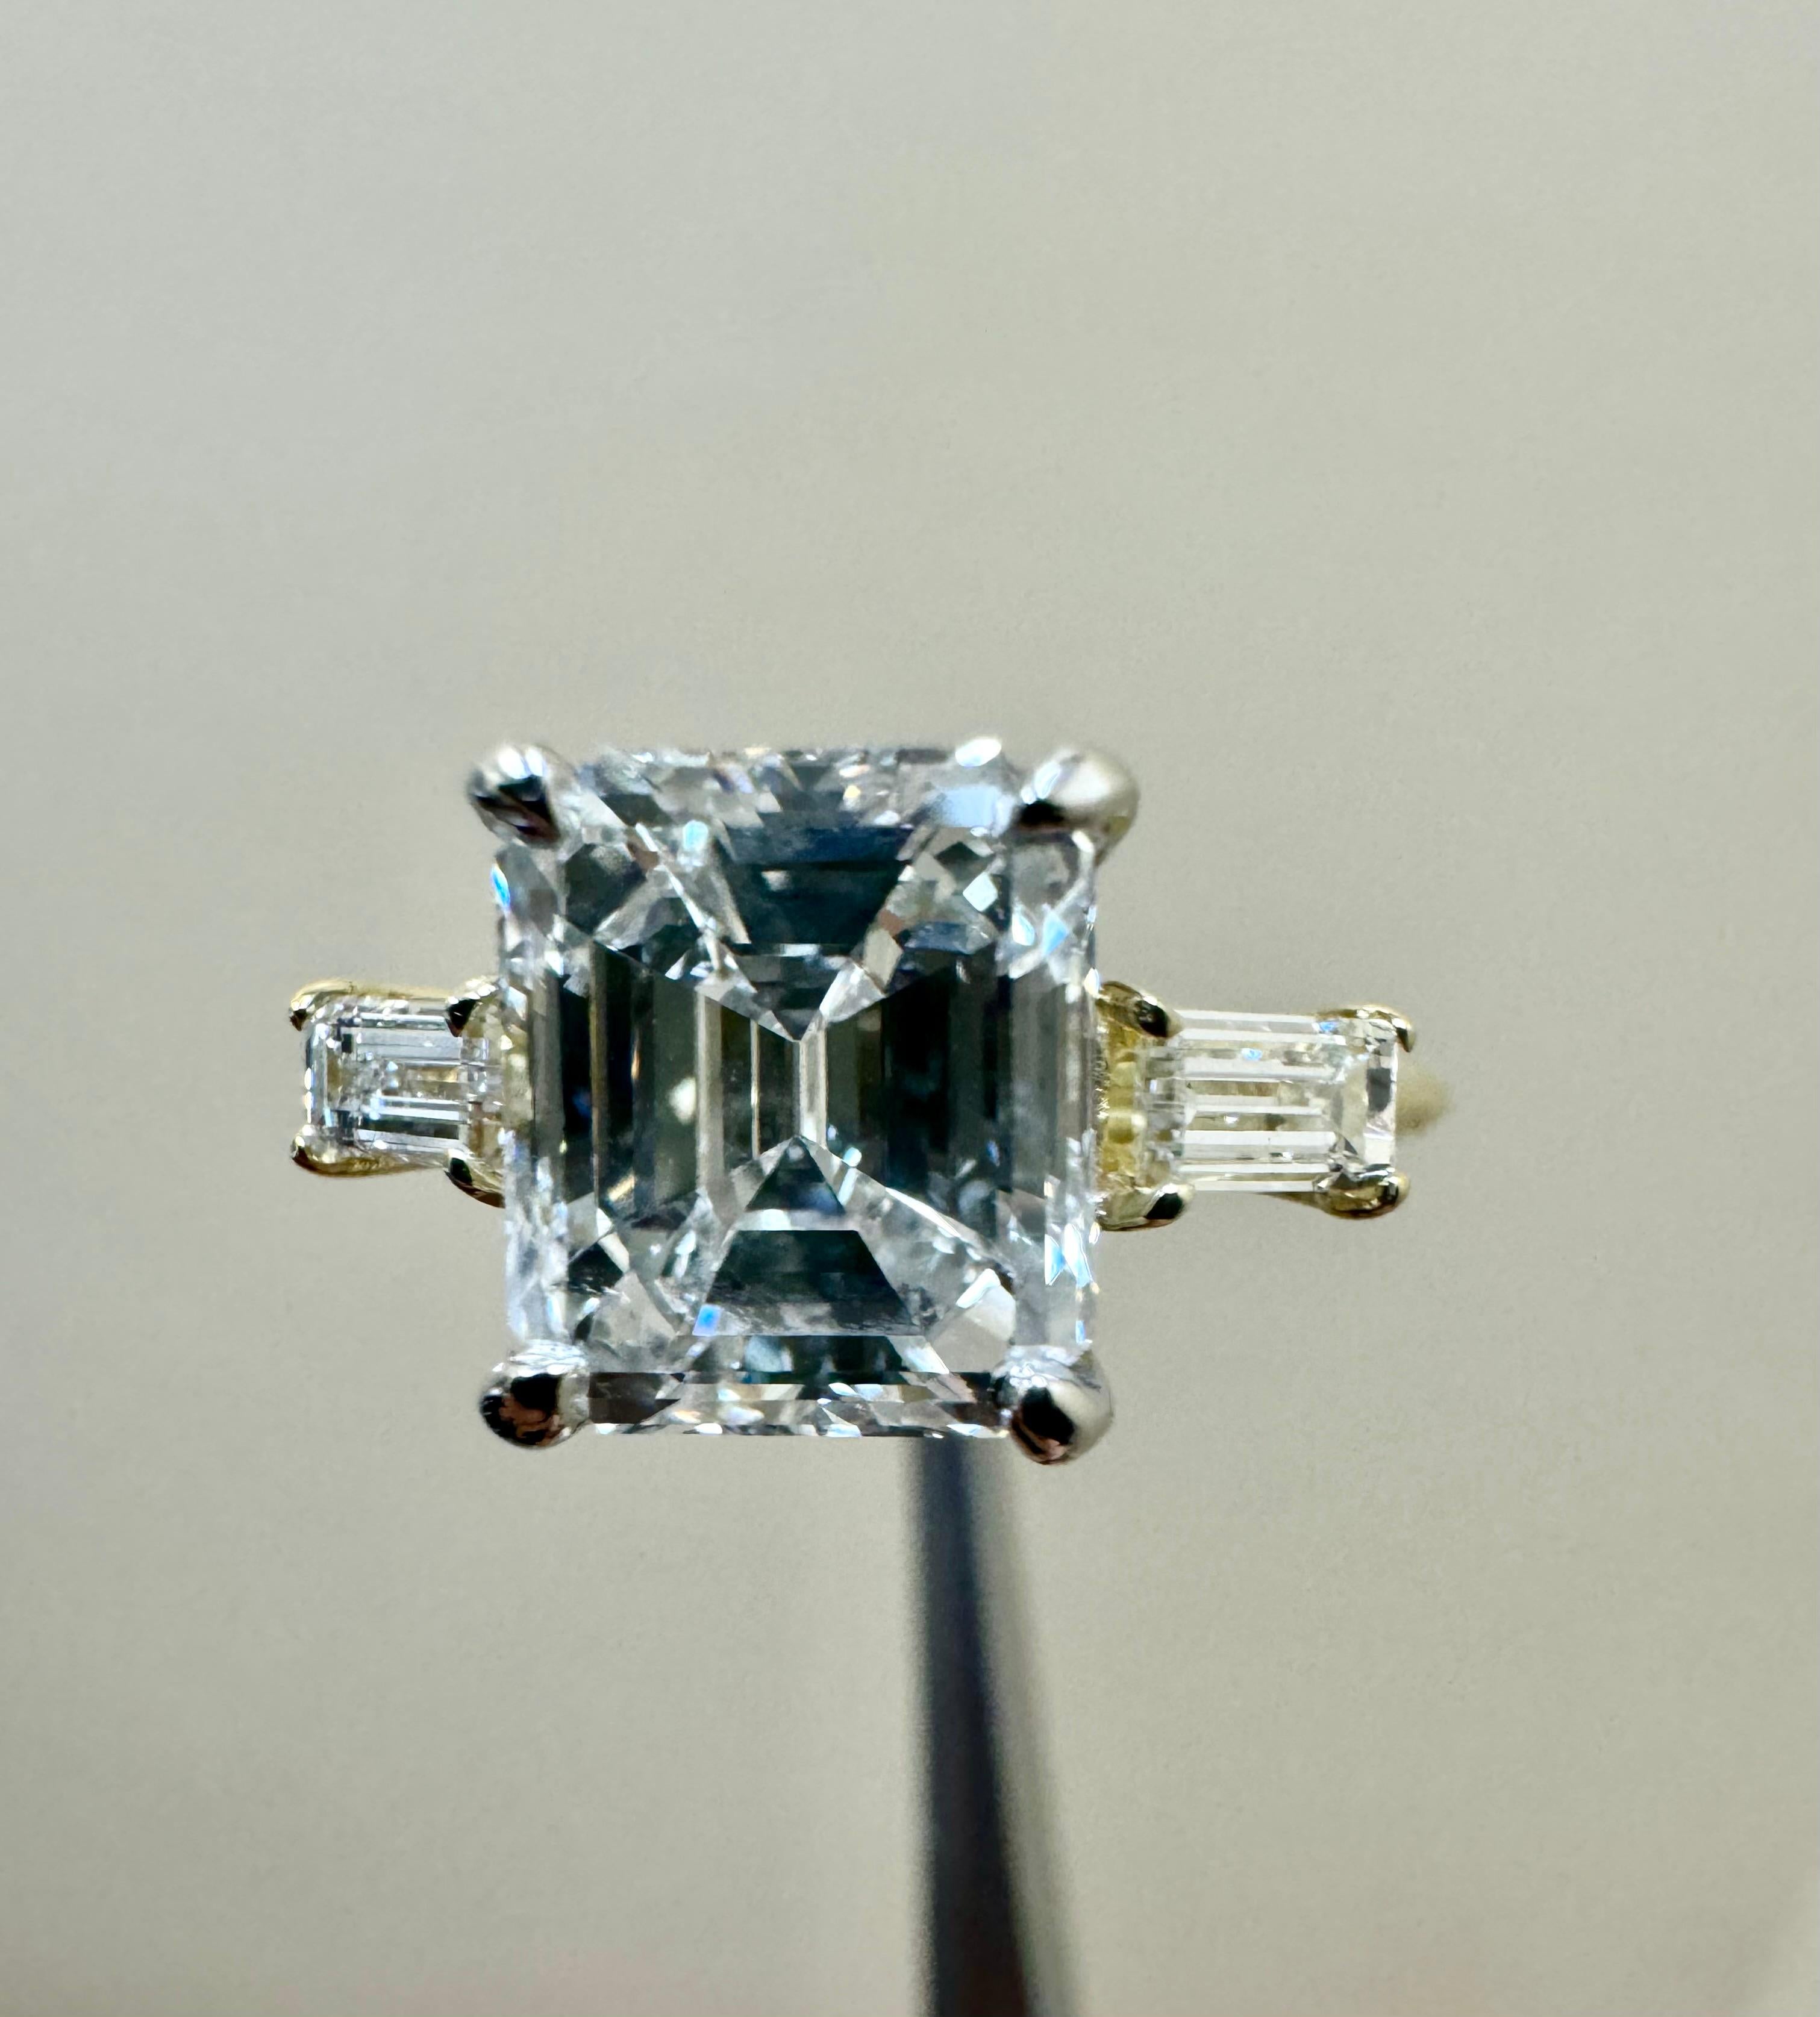 Vintage Art Deco GIA Certified 2.41 Carat Emerald Cut Diamond Engagement Ring For Sale 11